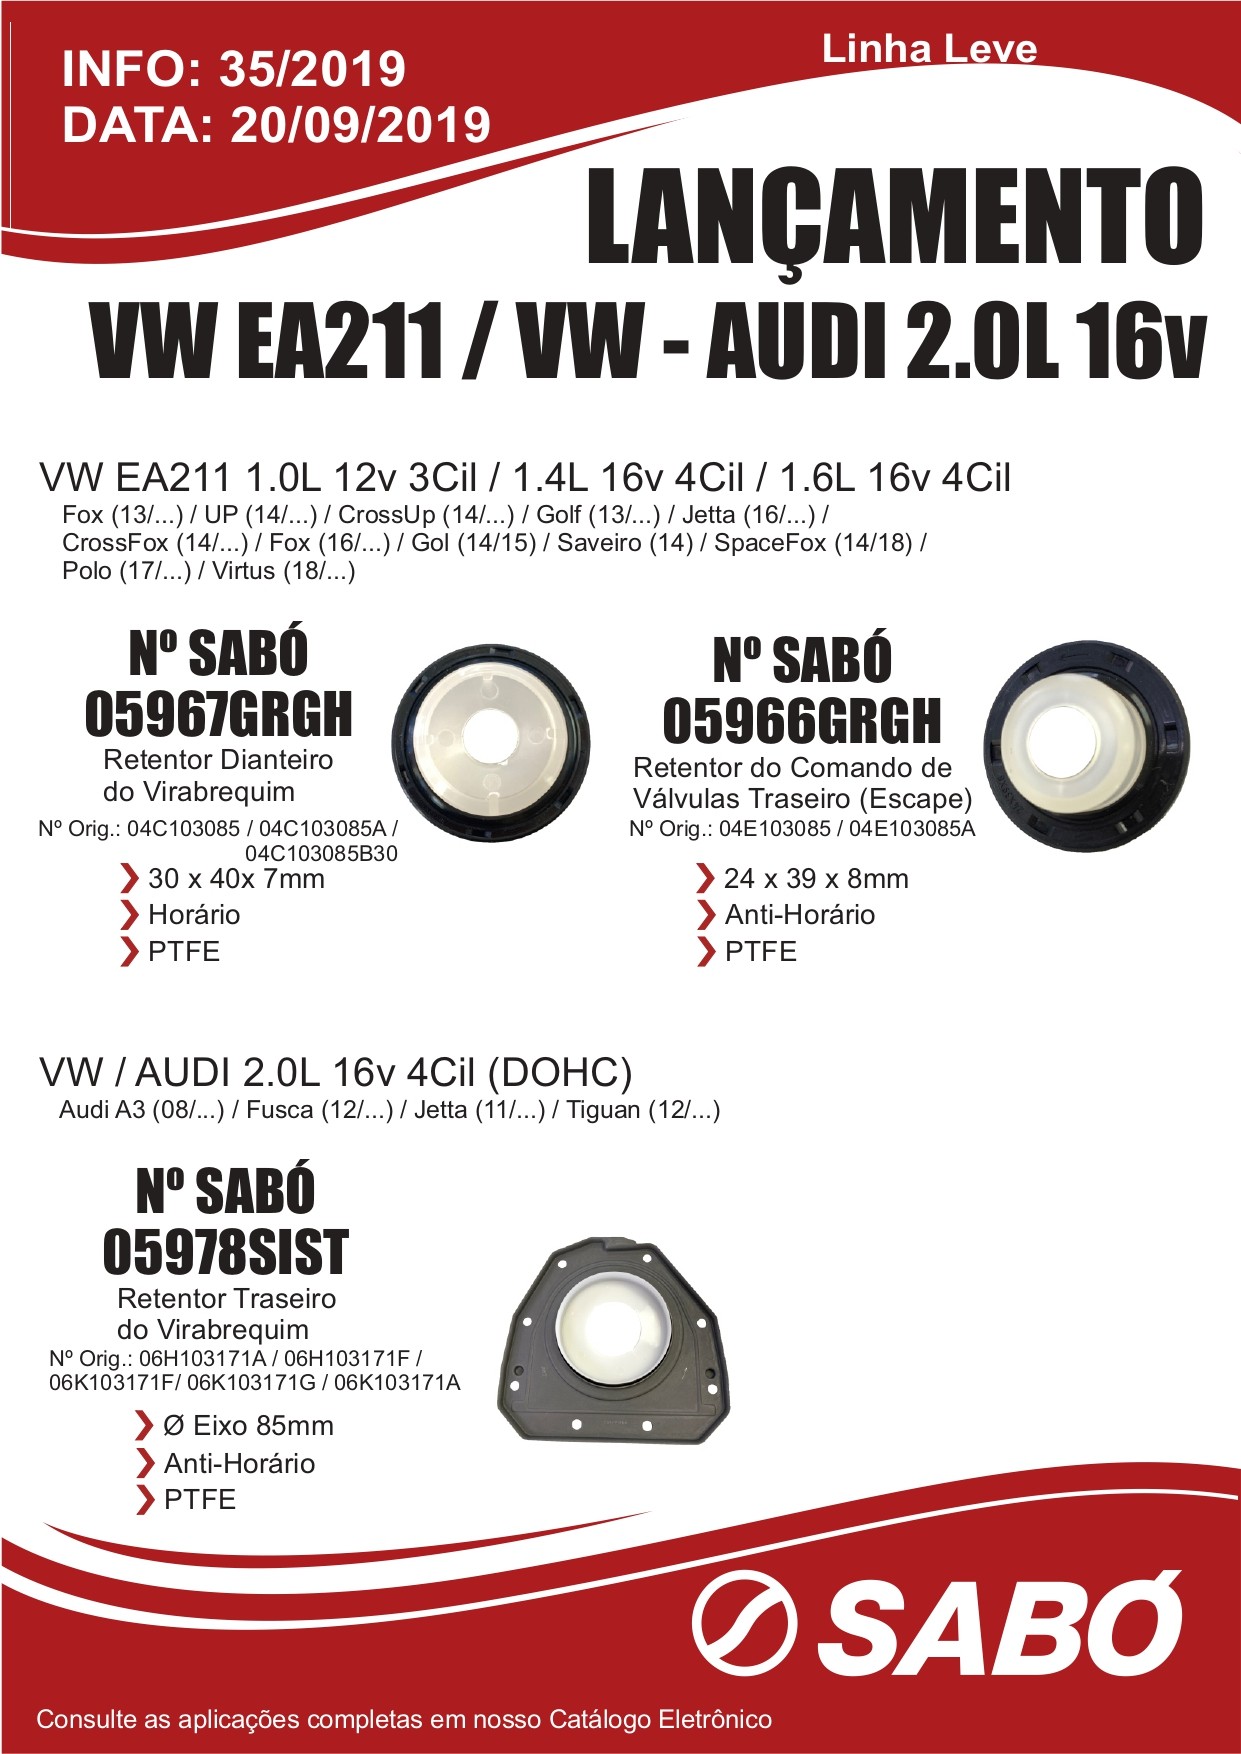 Info_035__Lancamento_VW_EA211__VW.Audi_2.0L_16v_pages-to-jpg-0001